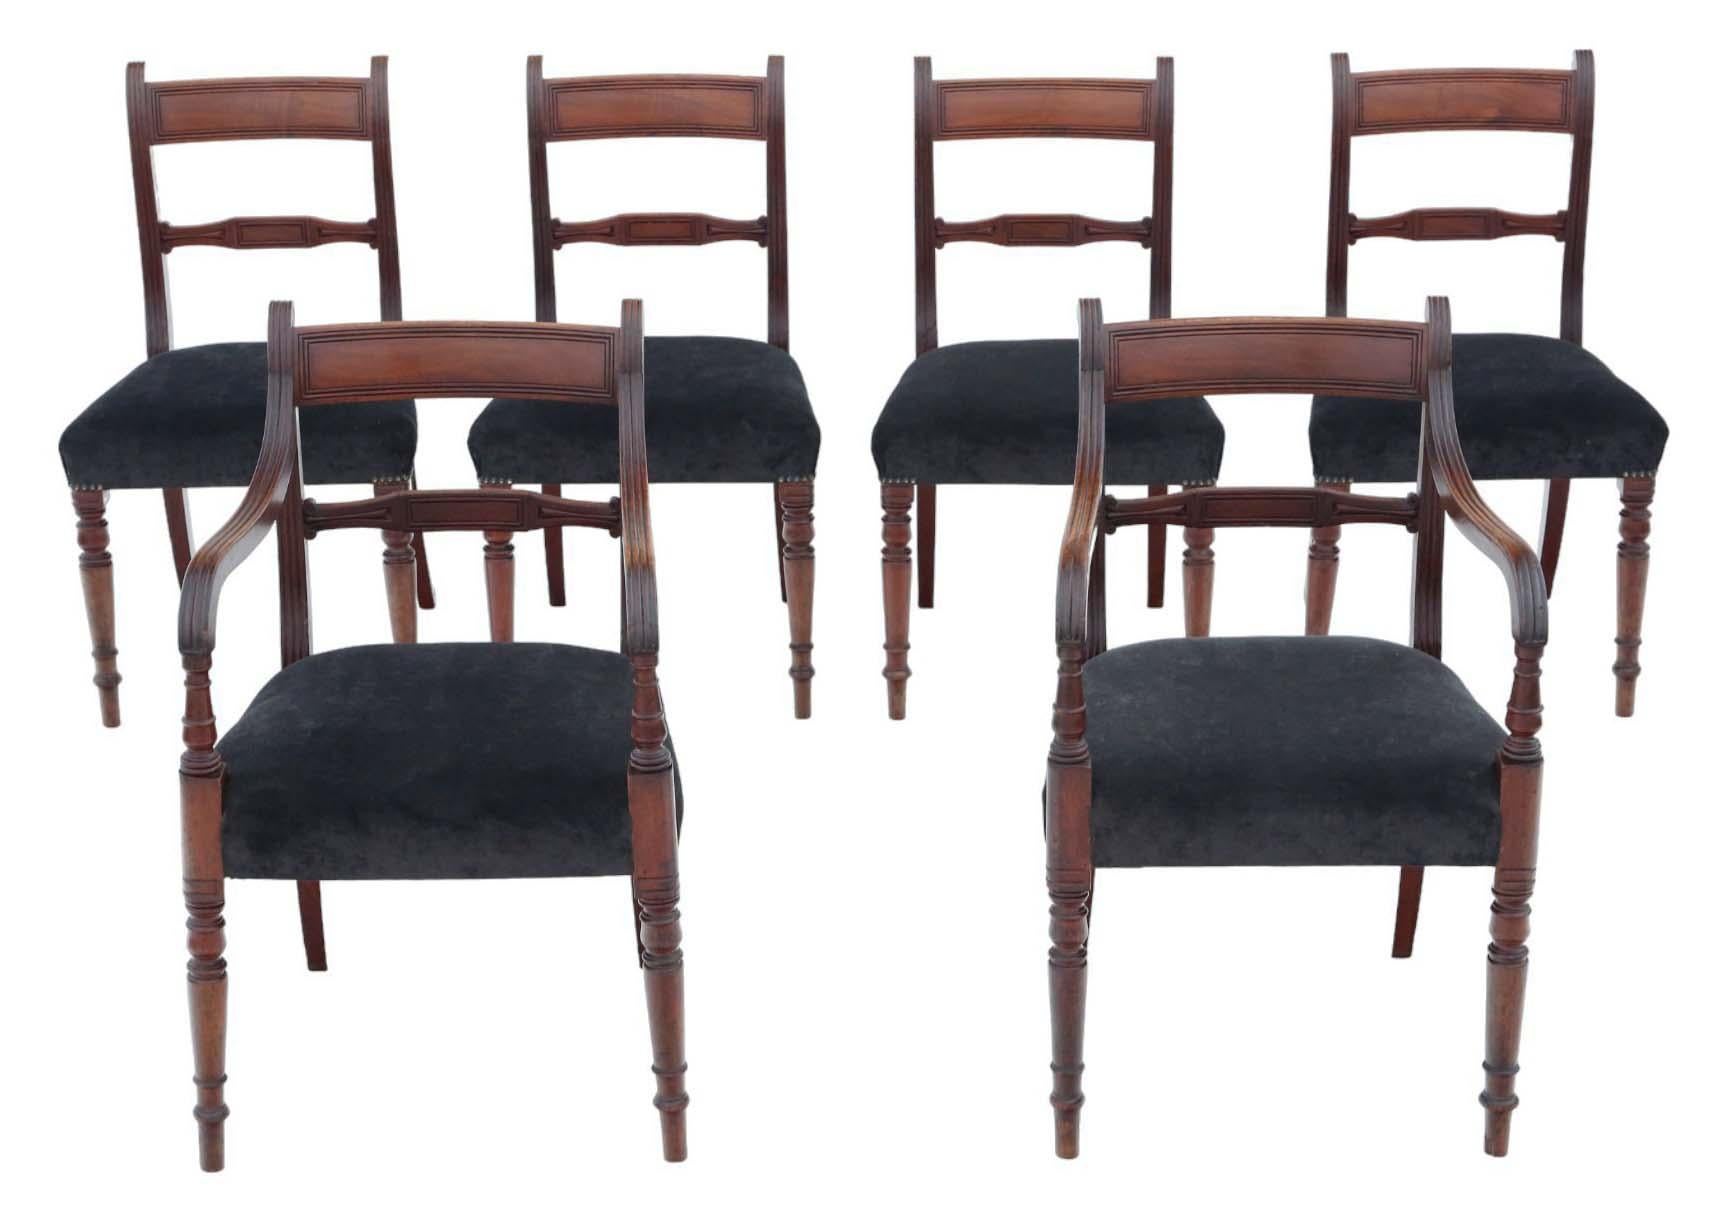 Antique fine quality set of 6 (4 plus 2) Georgian C1810 mahogany dining chairs